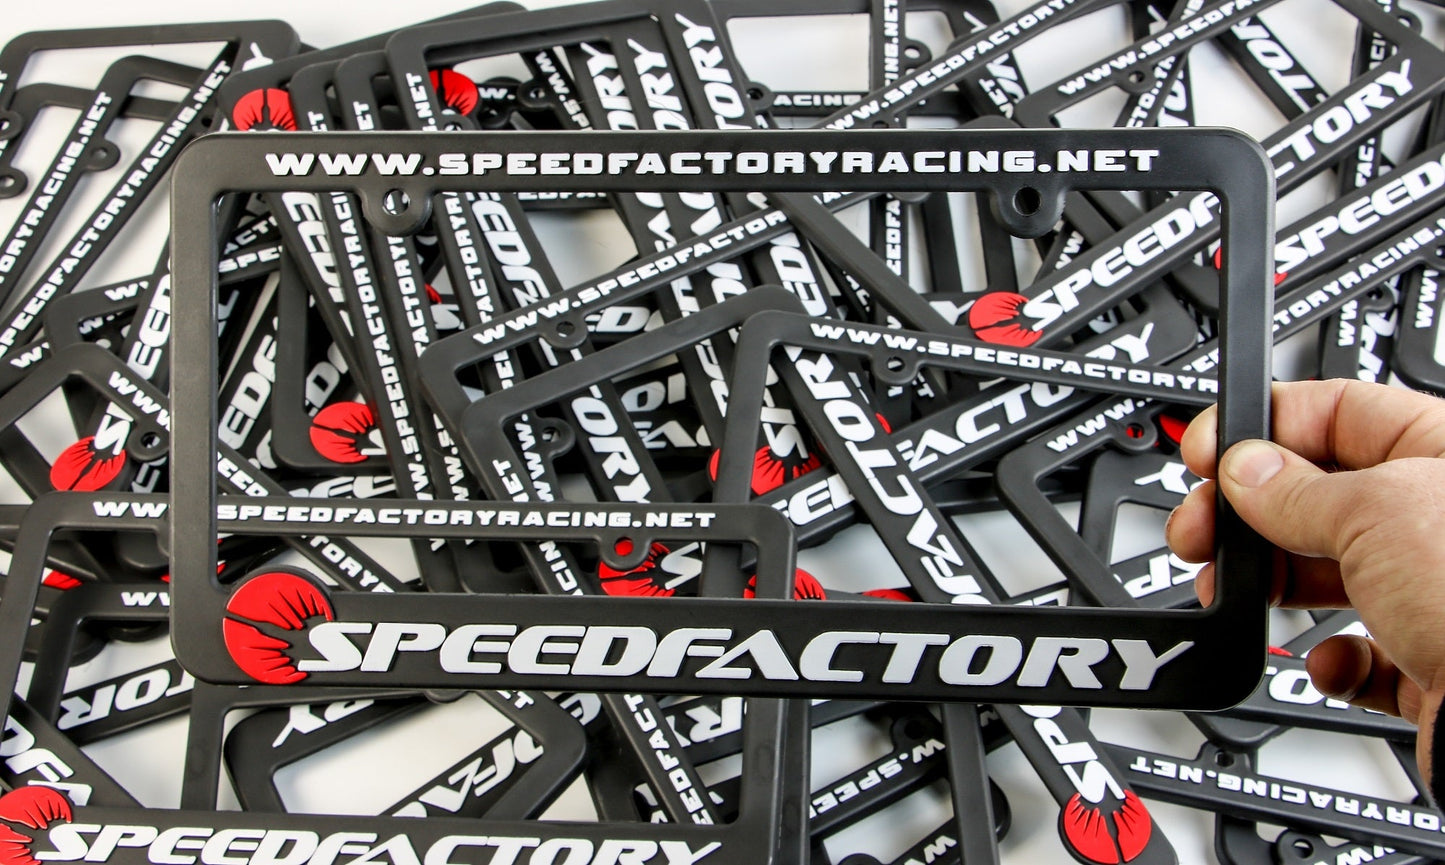 SpeedFactory Racing "OG" License Plate Frame